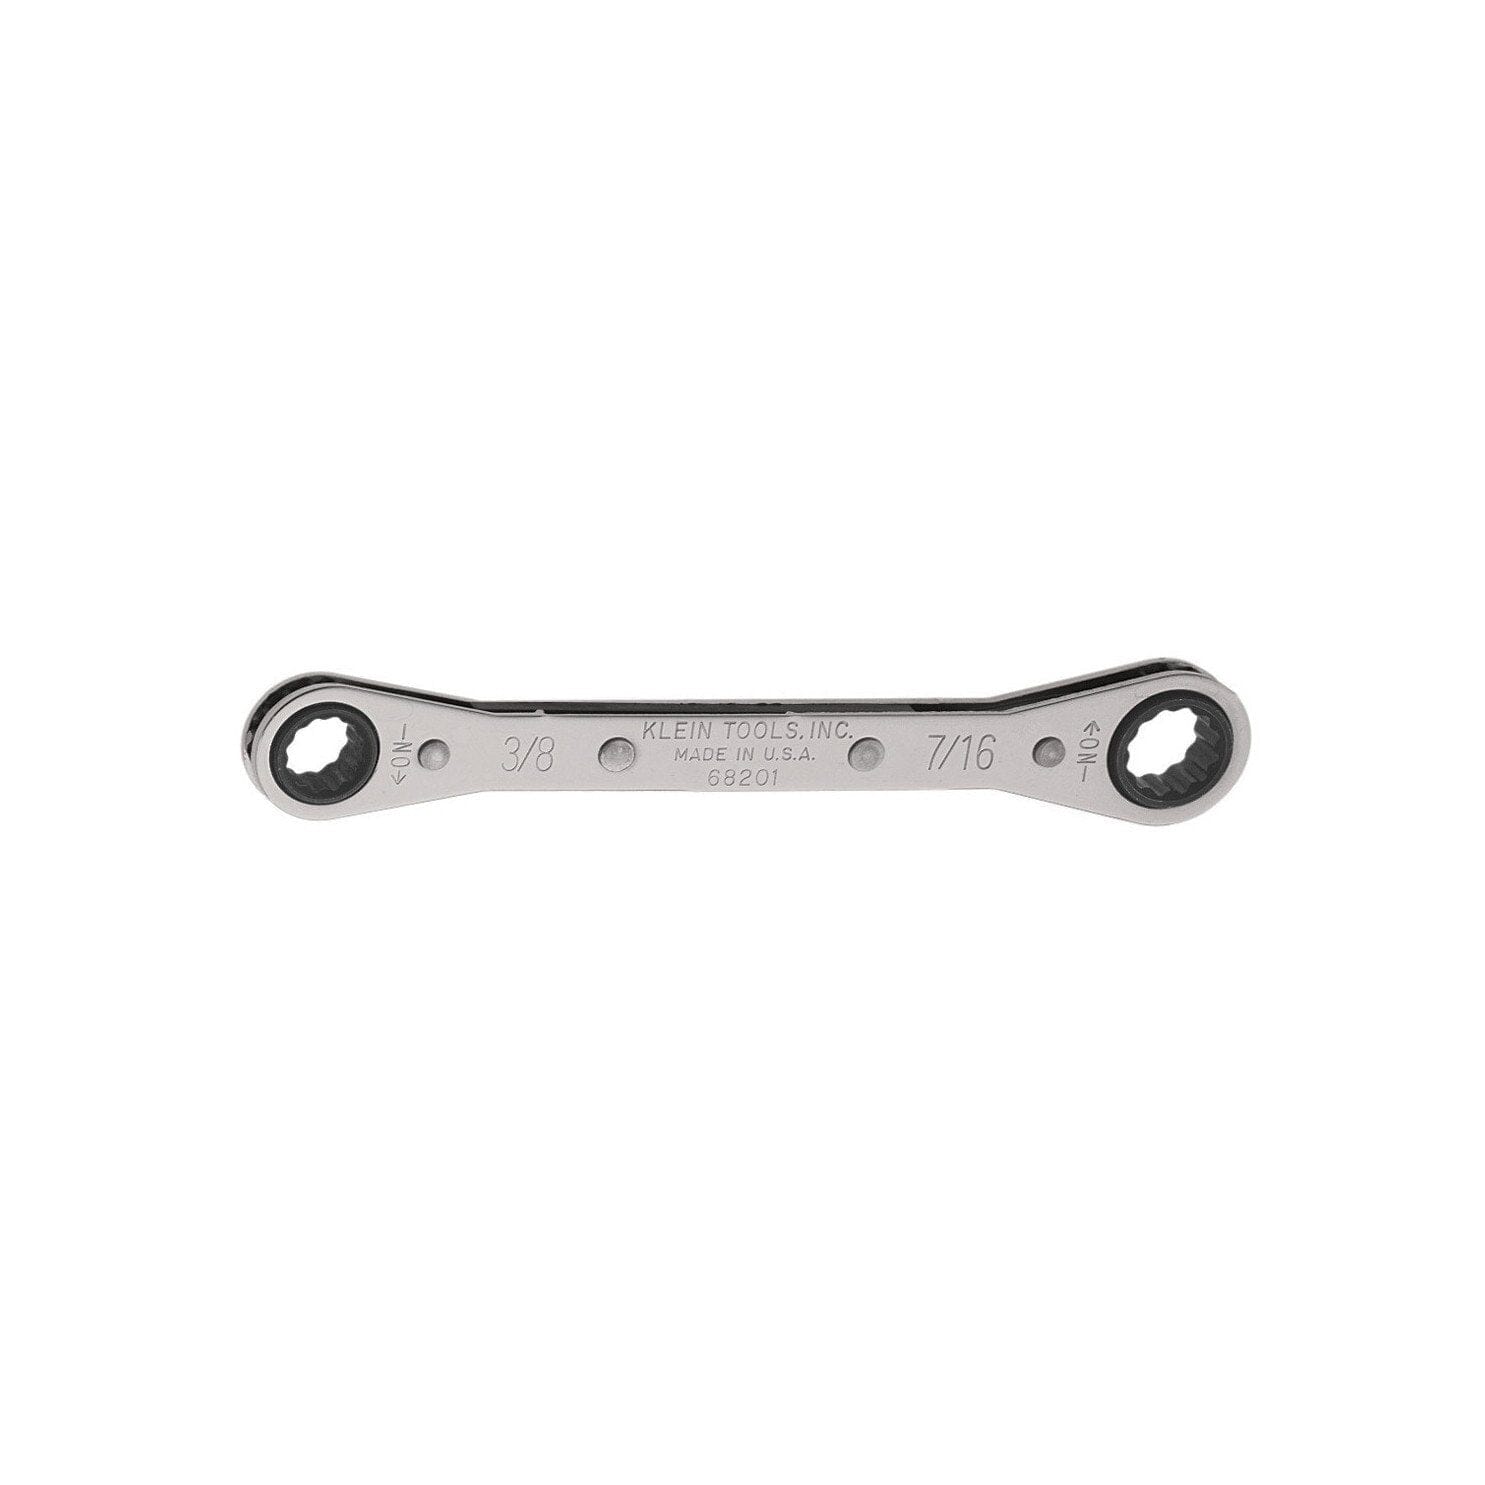 Klein Ratcheting Box Wrench - 3/8'' x 7/16'' - 68201 Wrenches Klein Tools 